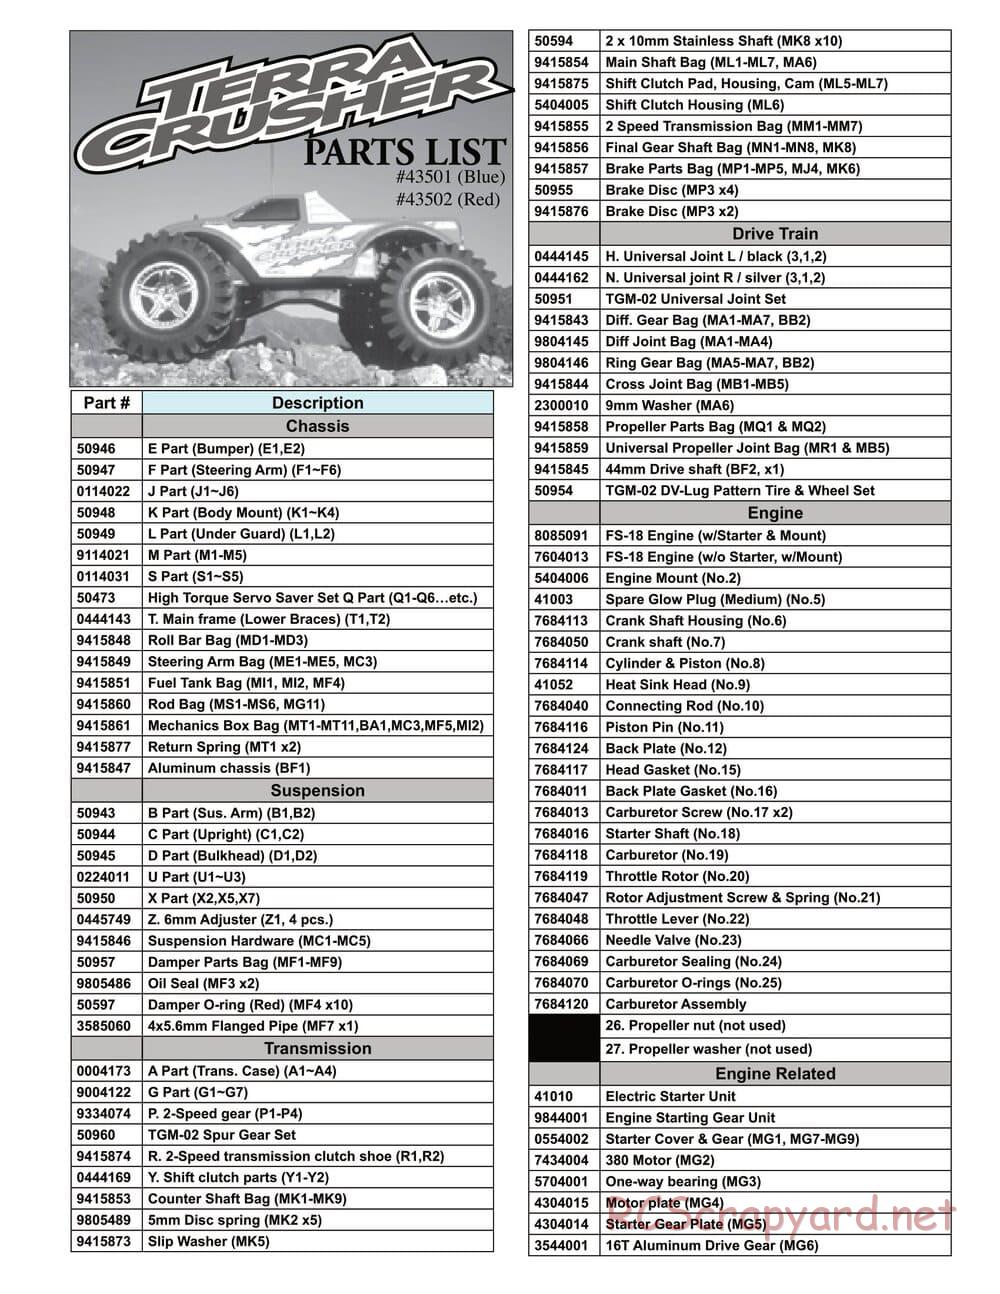 Tamiya - Terra Crusher - TGM-02 Chassis - Parts - Page 1